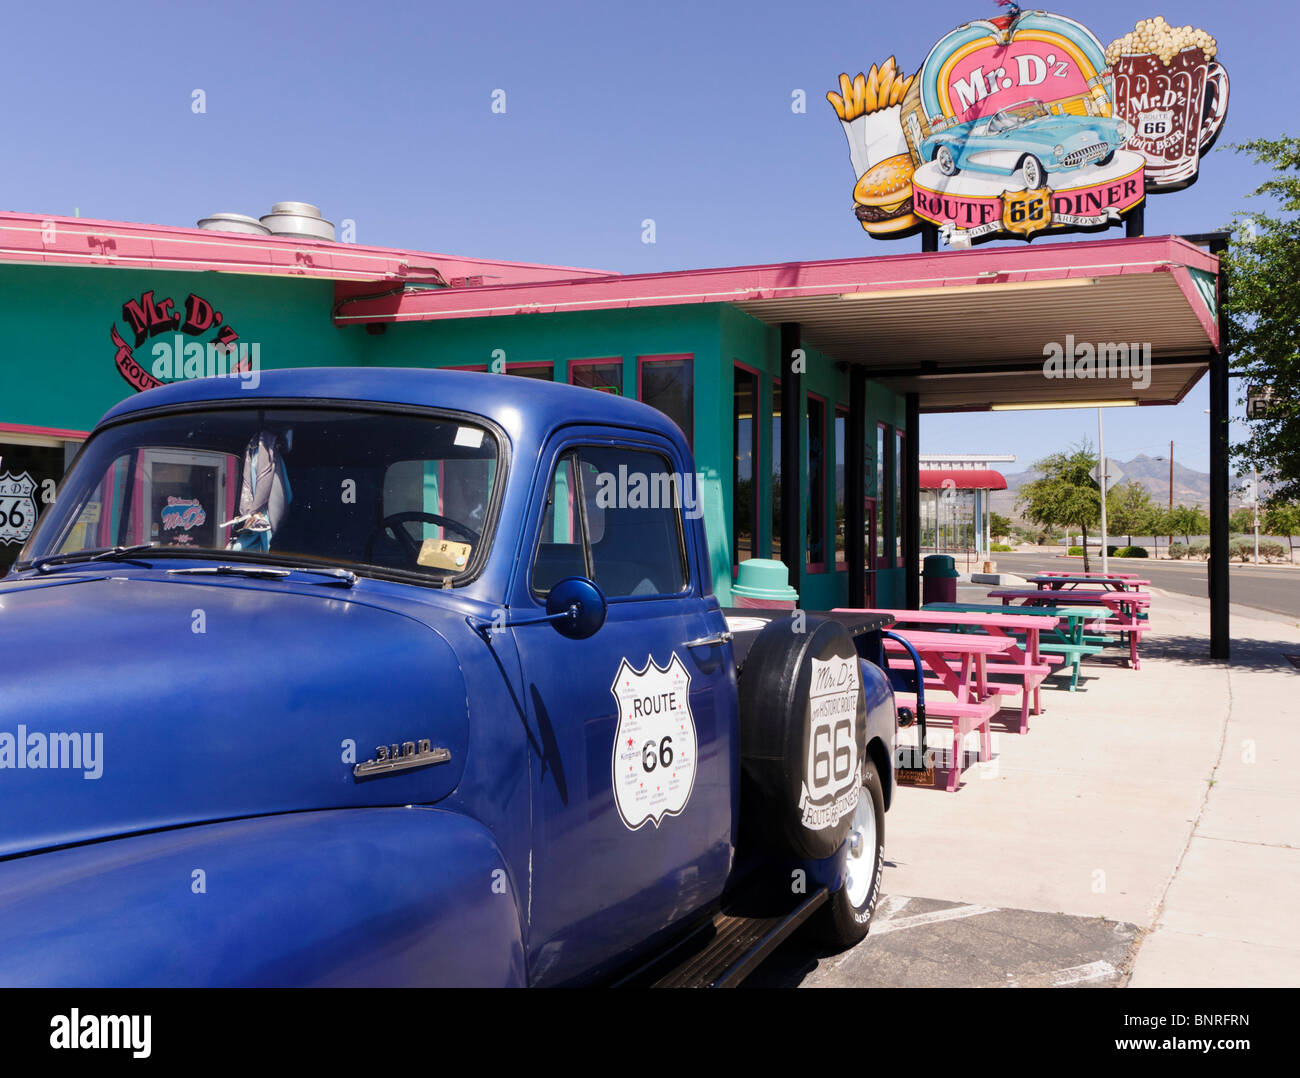 Route 66 road trip Arizona - Kingman AZ historic town - Mr D'z roadside 1950s style diner Stock Photo